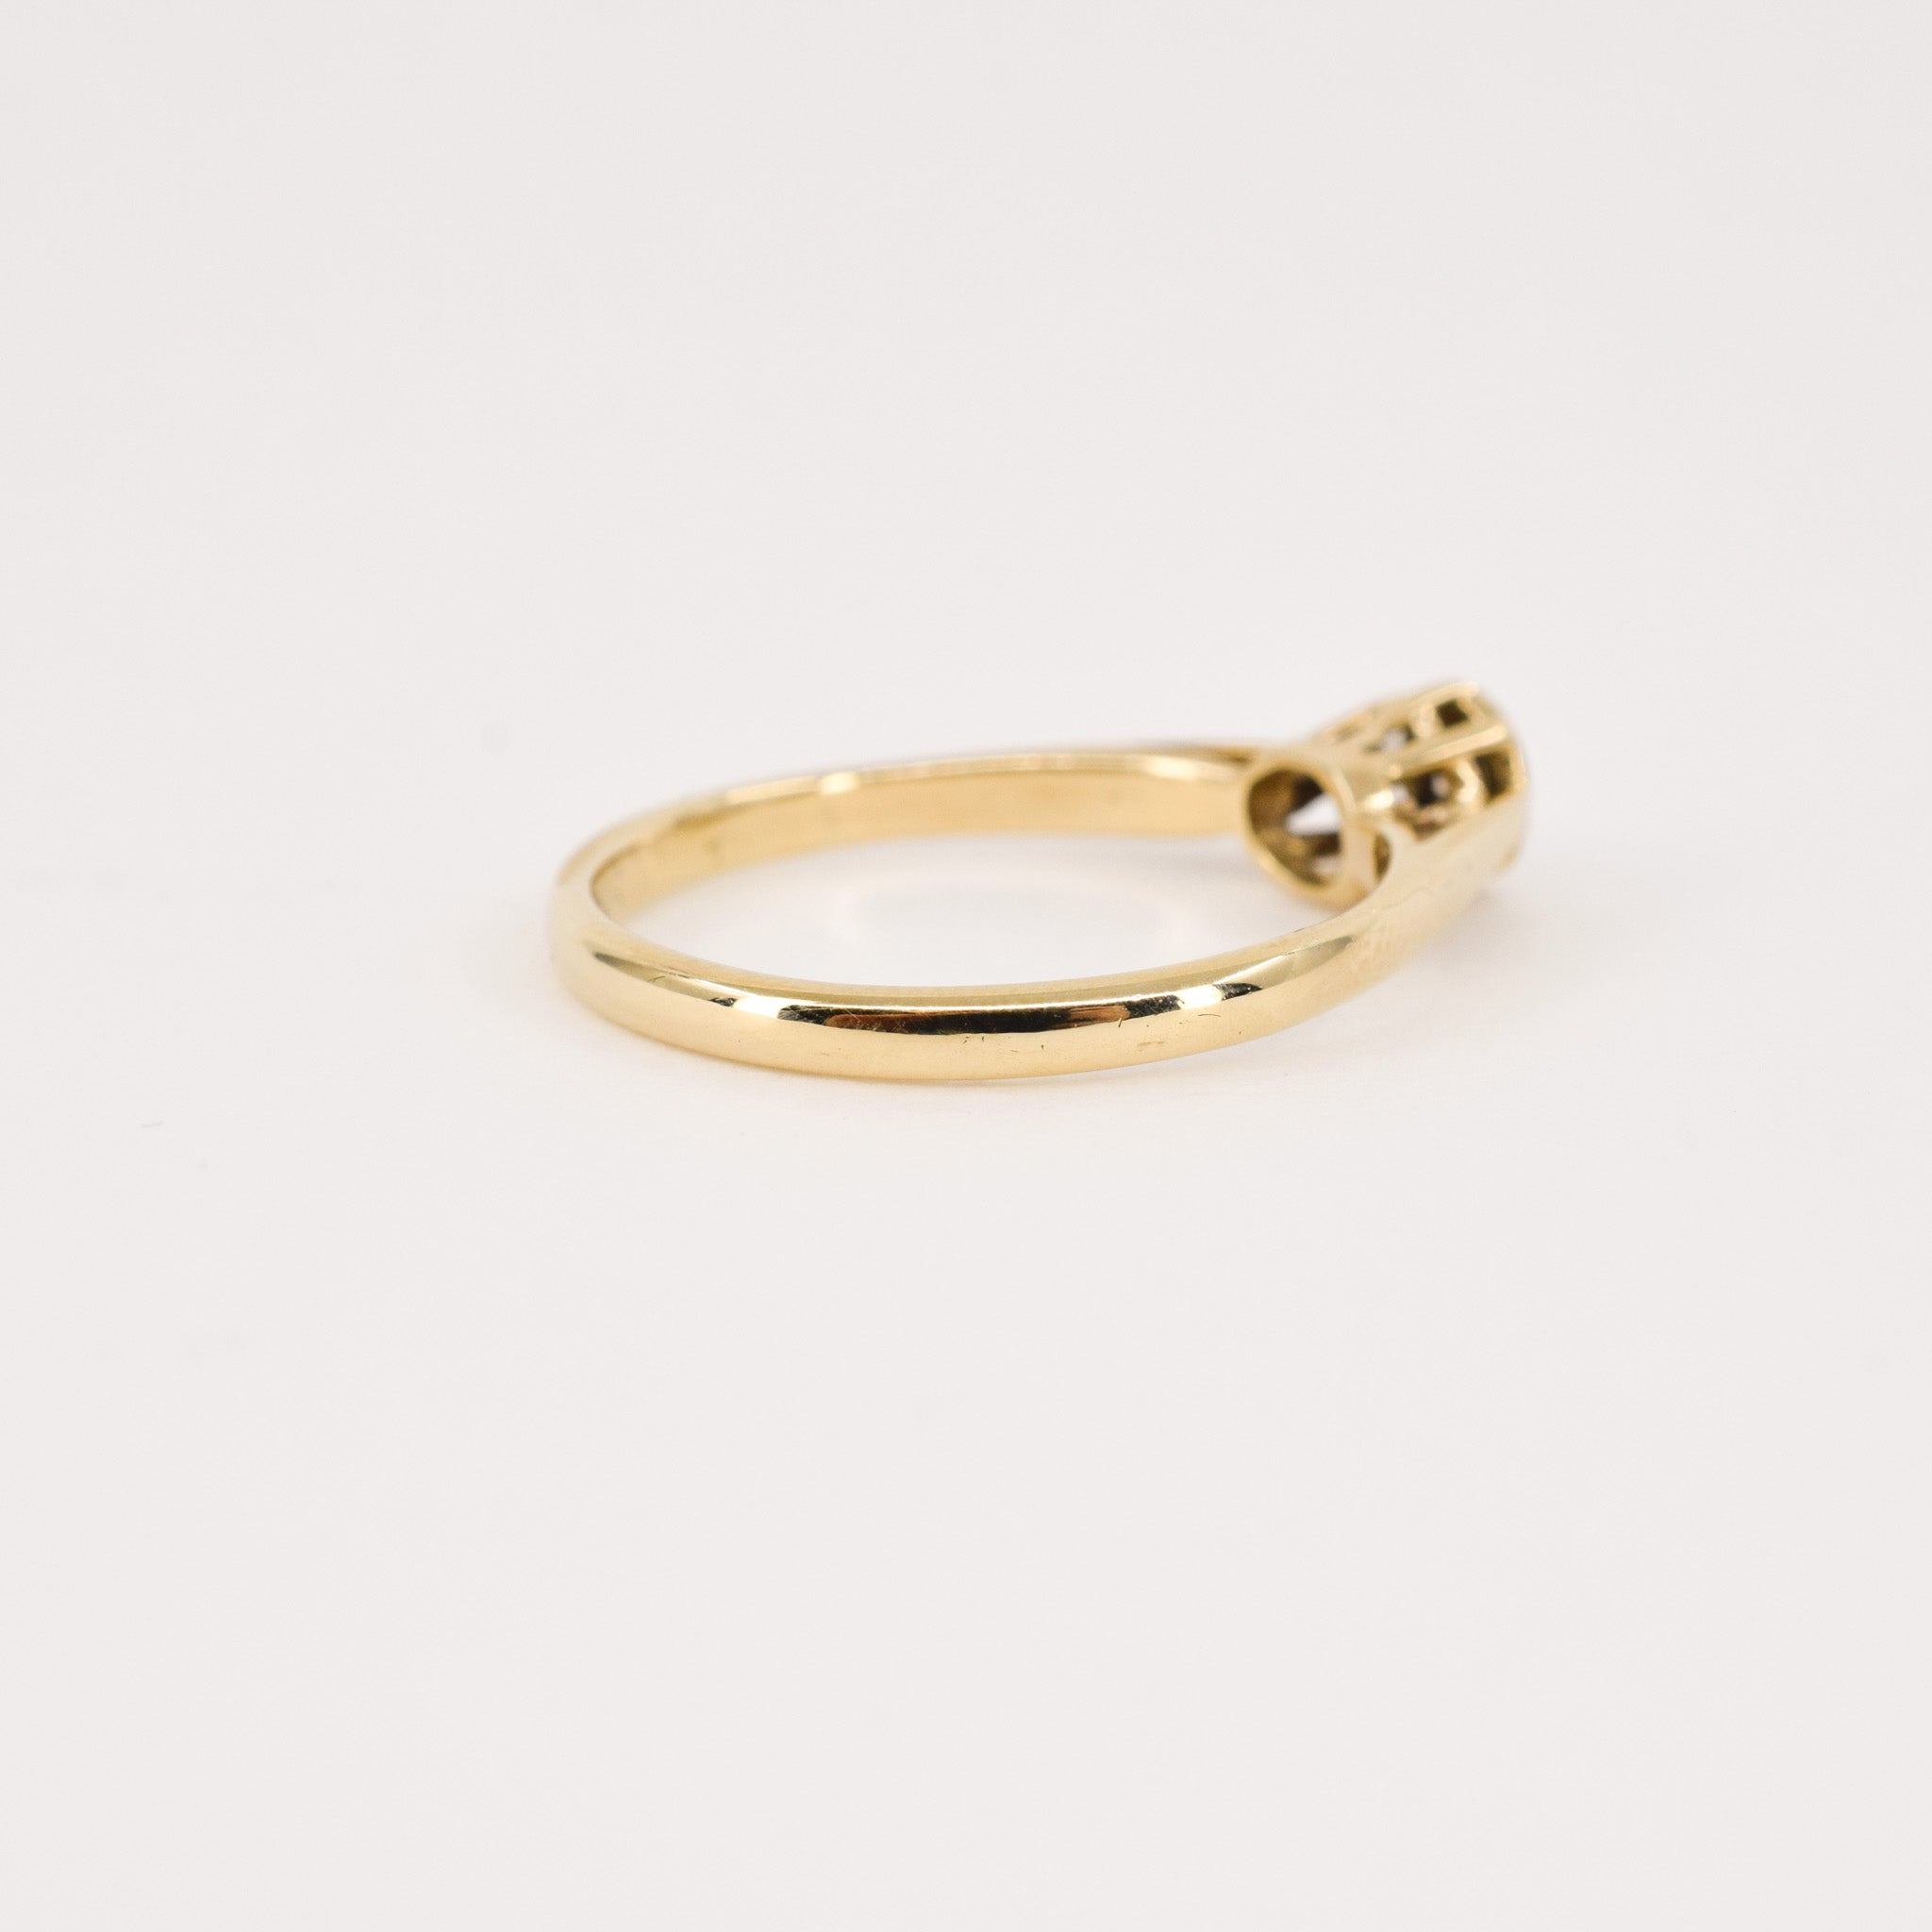 antique diamond bezel set ring, folklor vintage jewelry canada